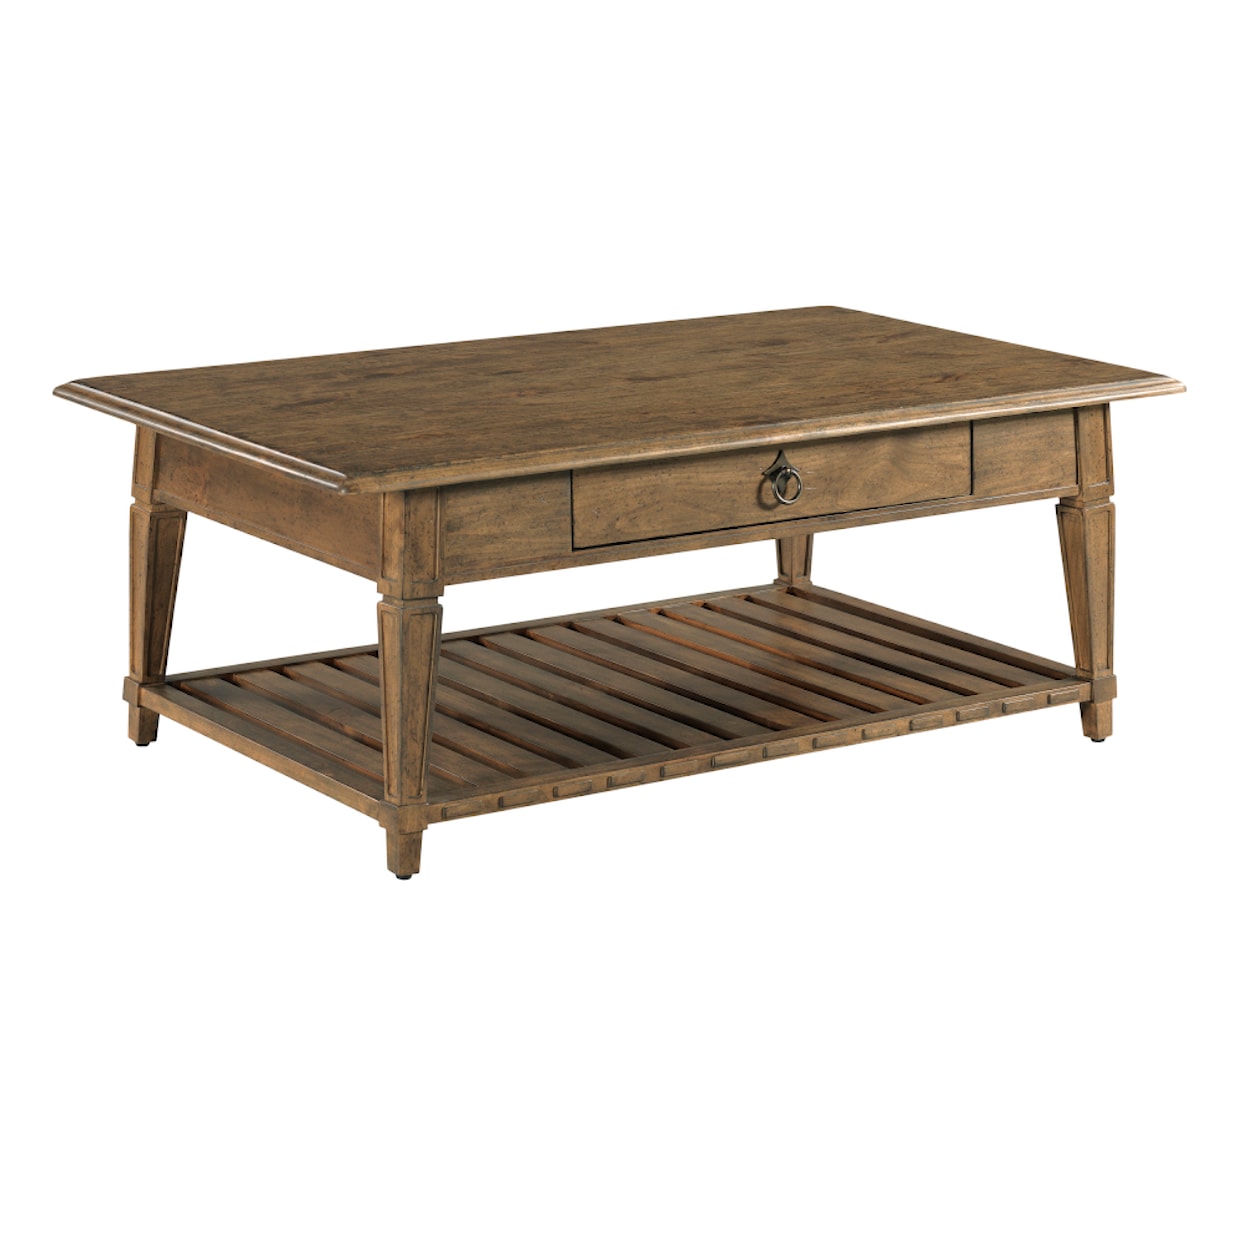 Kincaid Furniture Ansley Atwood Rectangular Coffee Table